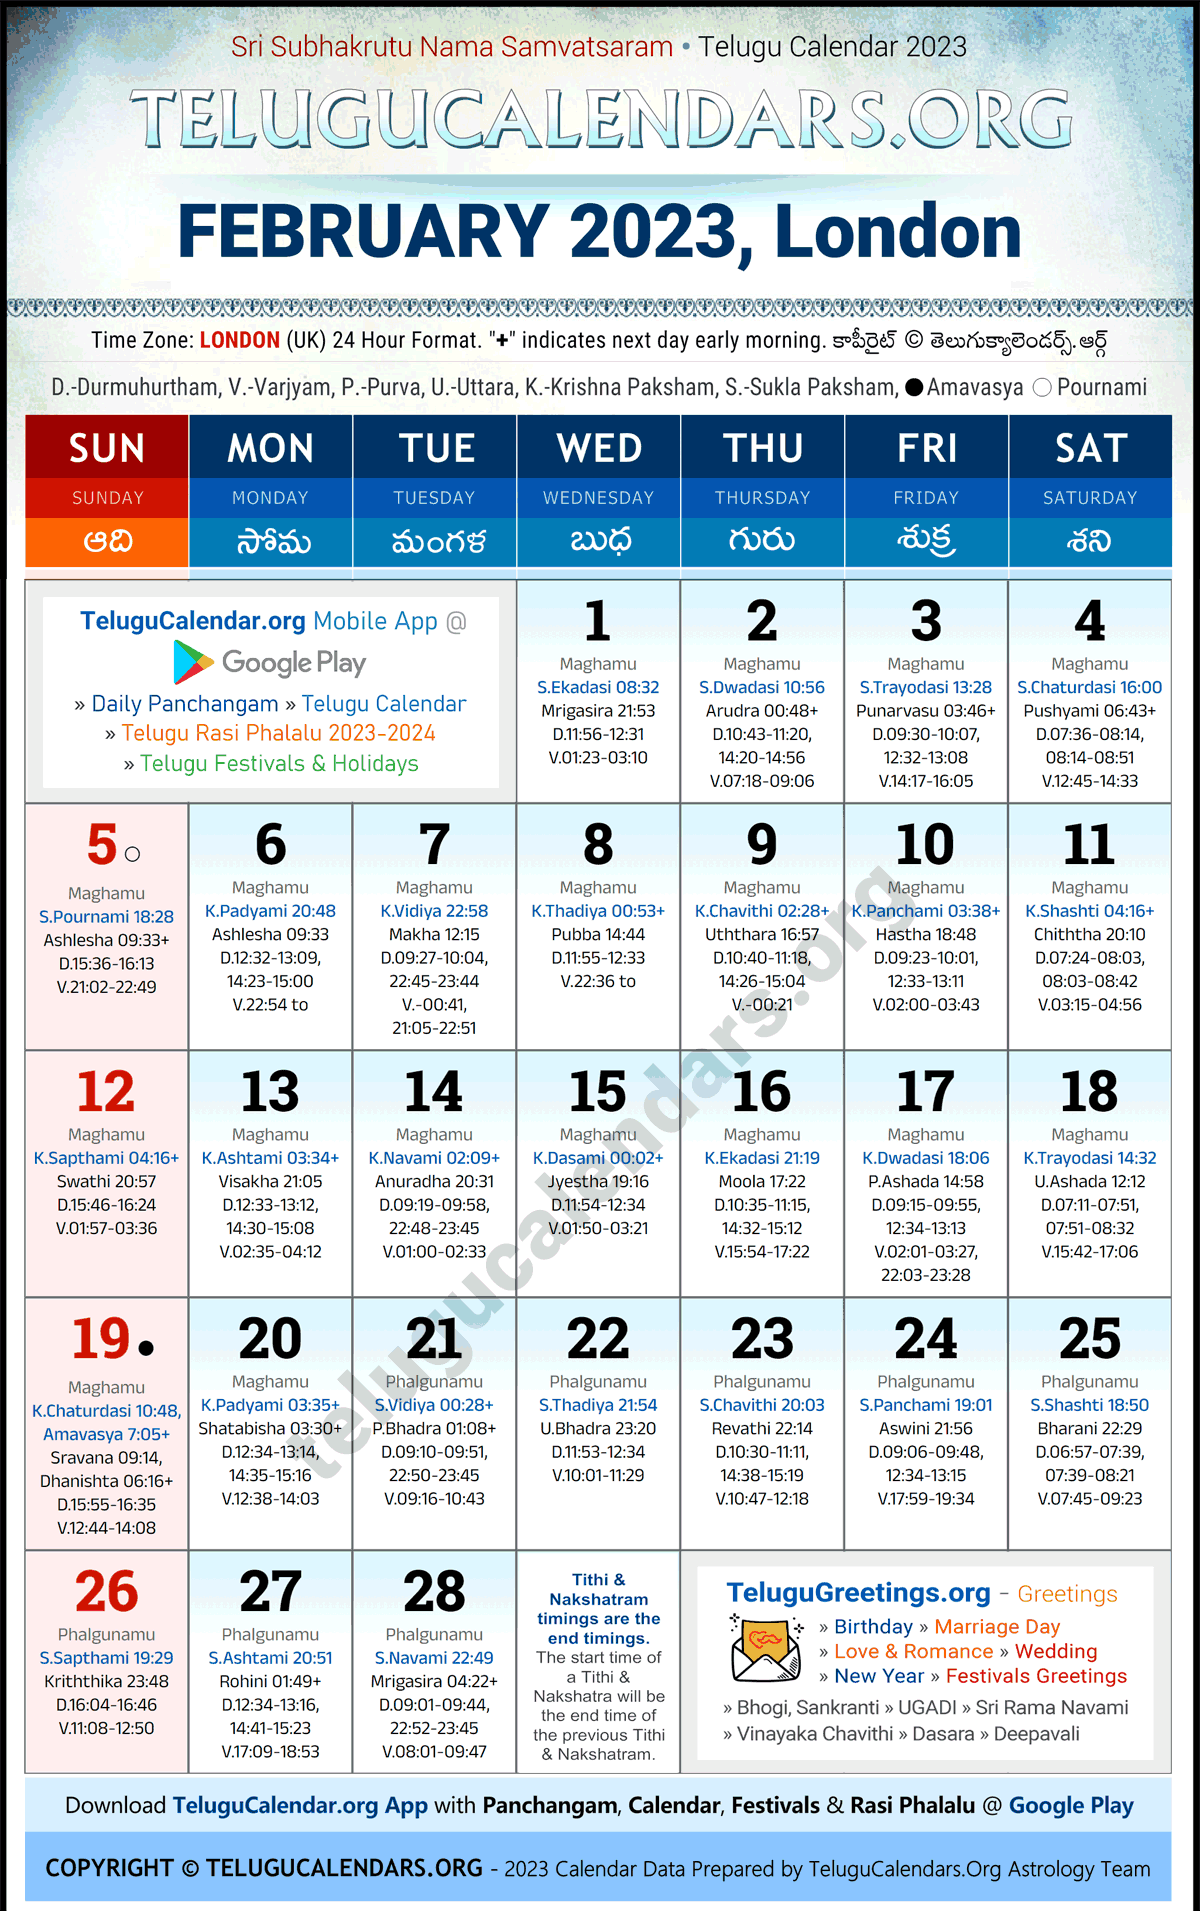 Telugu Calendar 2023 February Festivals for London